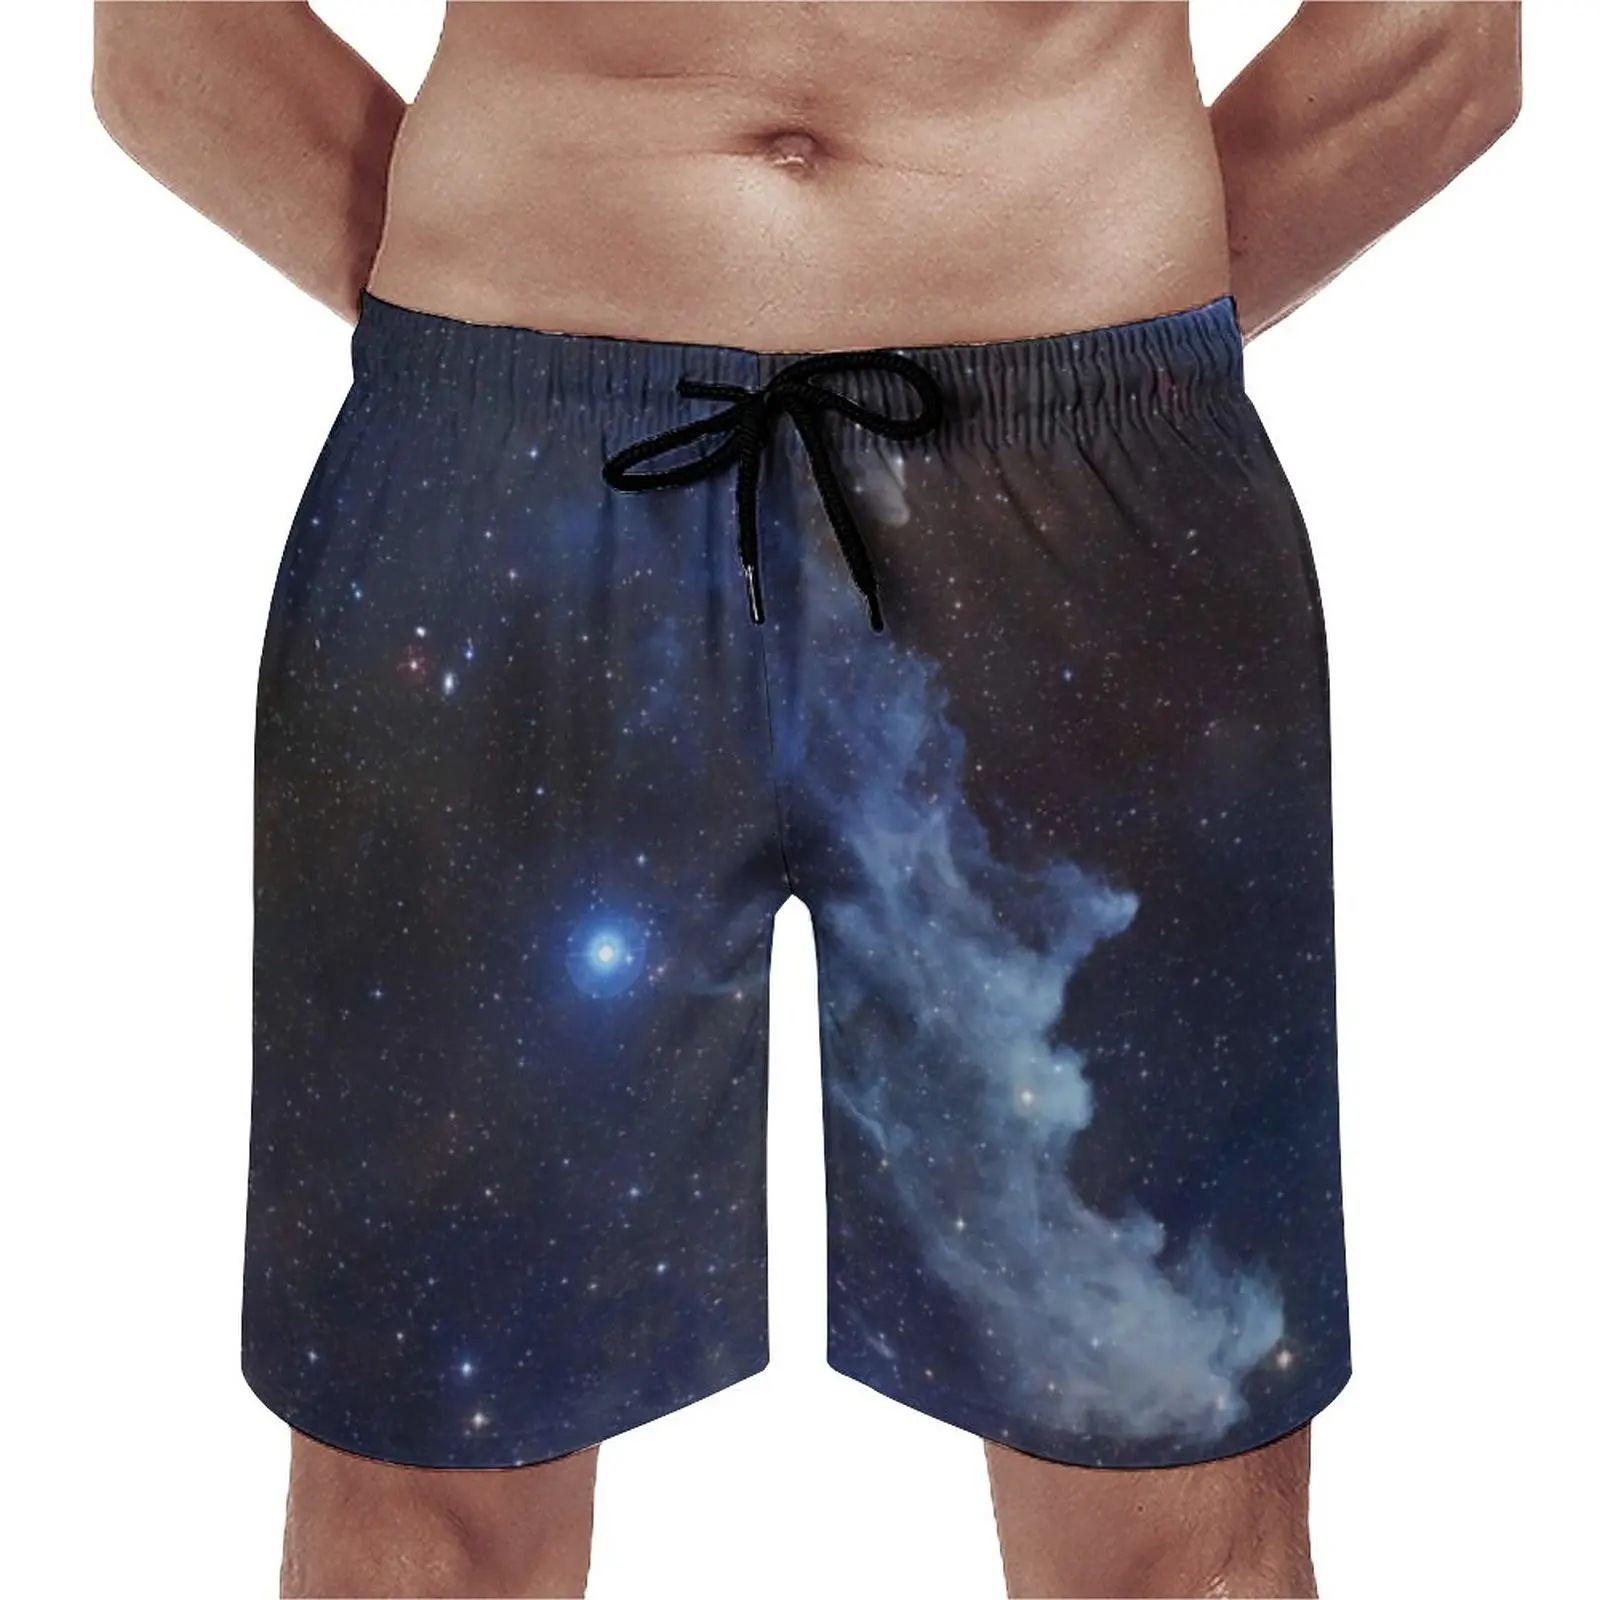 

Gym Shorts Star Cloud Retro Beach Trunks Galaxy Print Males Quick Dry Running Surf Hot Sale Plus Size Beach Shorts